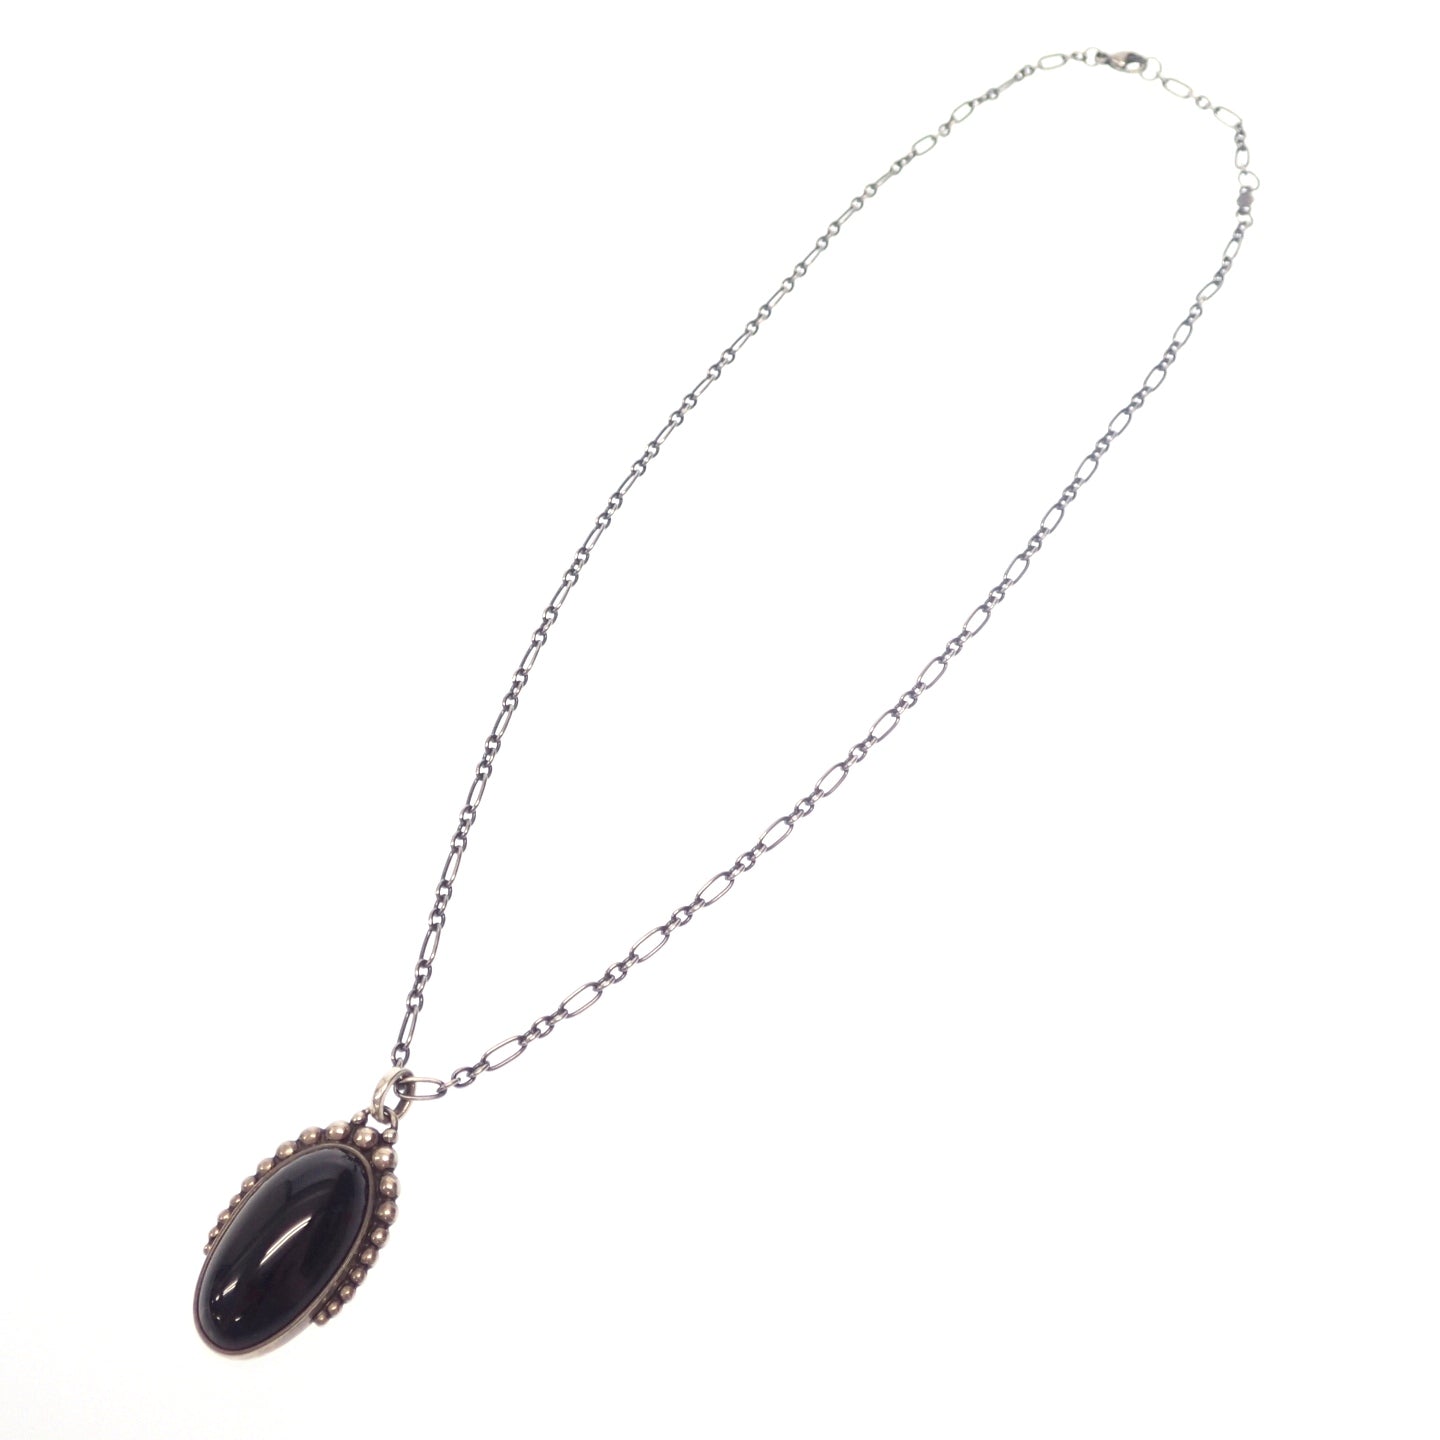 Good condition ◆ Georg Jensen necklace pendant colored stone 925S 9B onyx black x silver GEORG JENSEN [AFI10] 